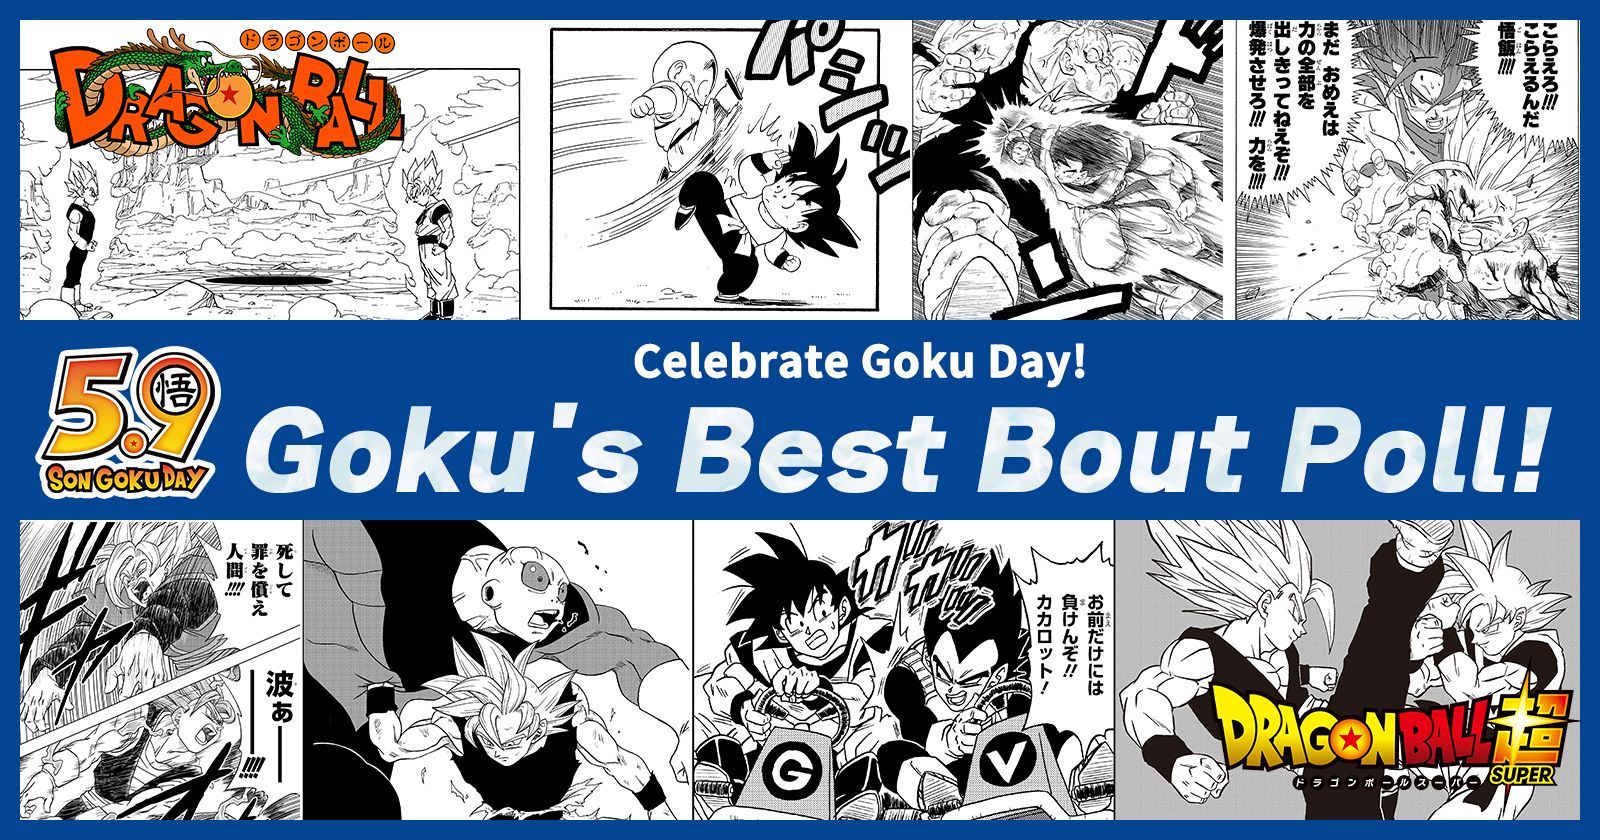 [Summary] Goku Day Celebration Event 